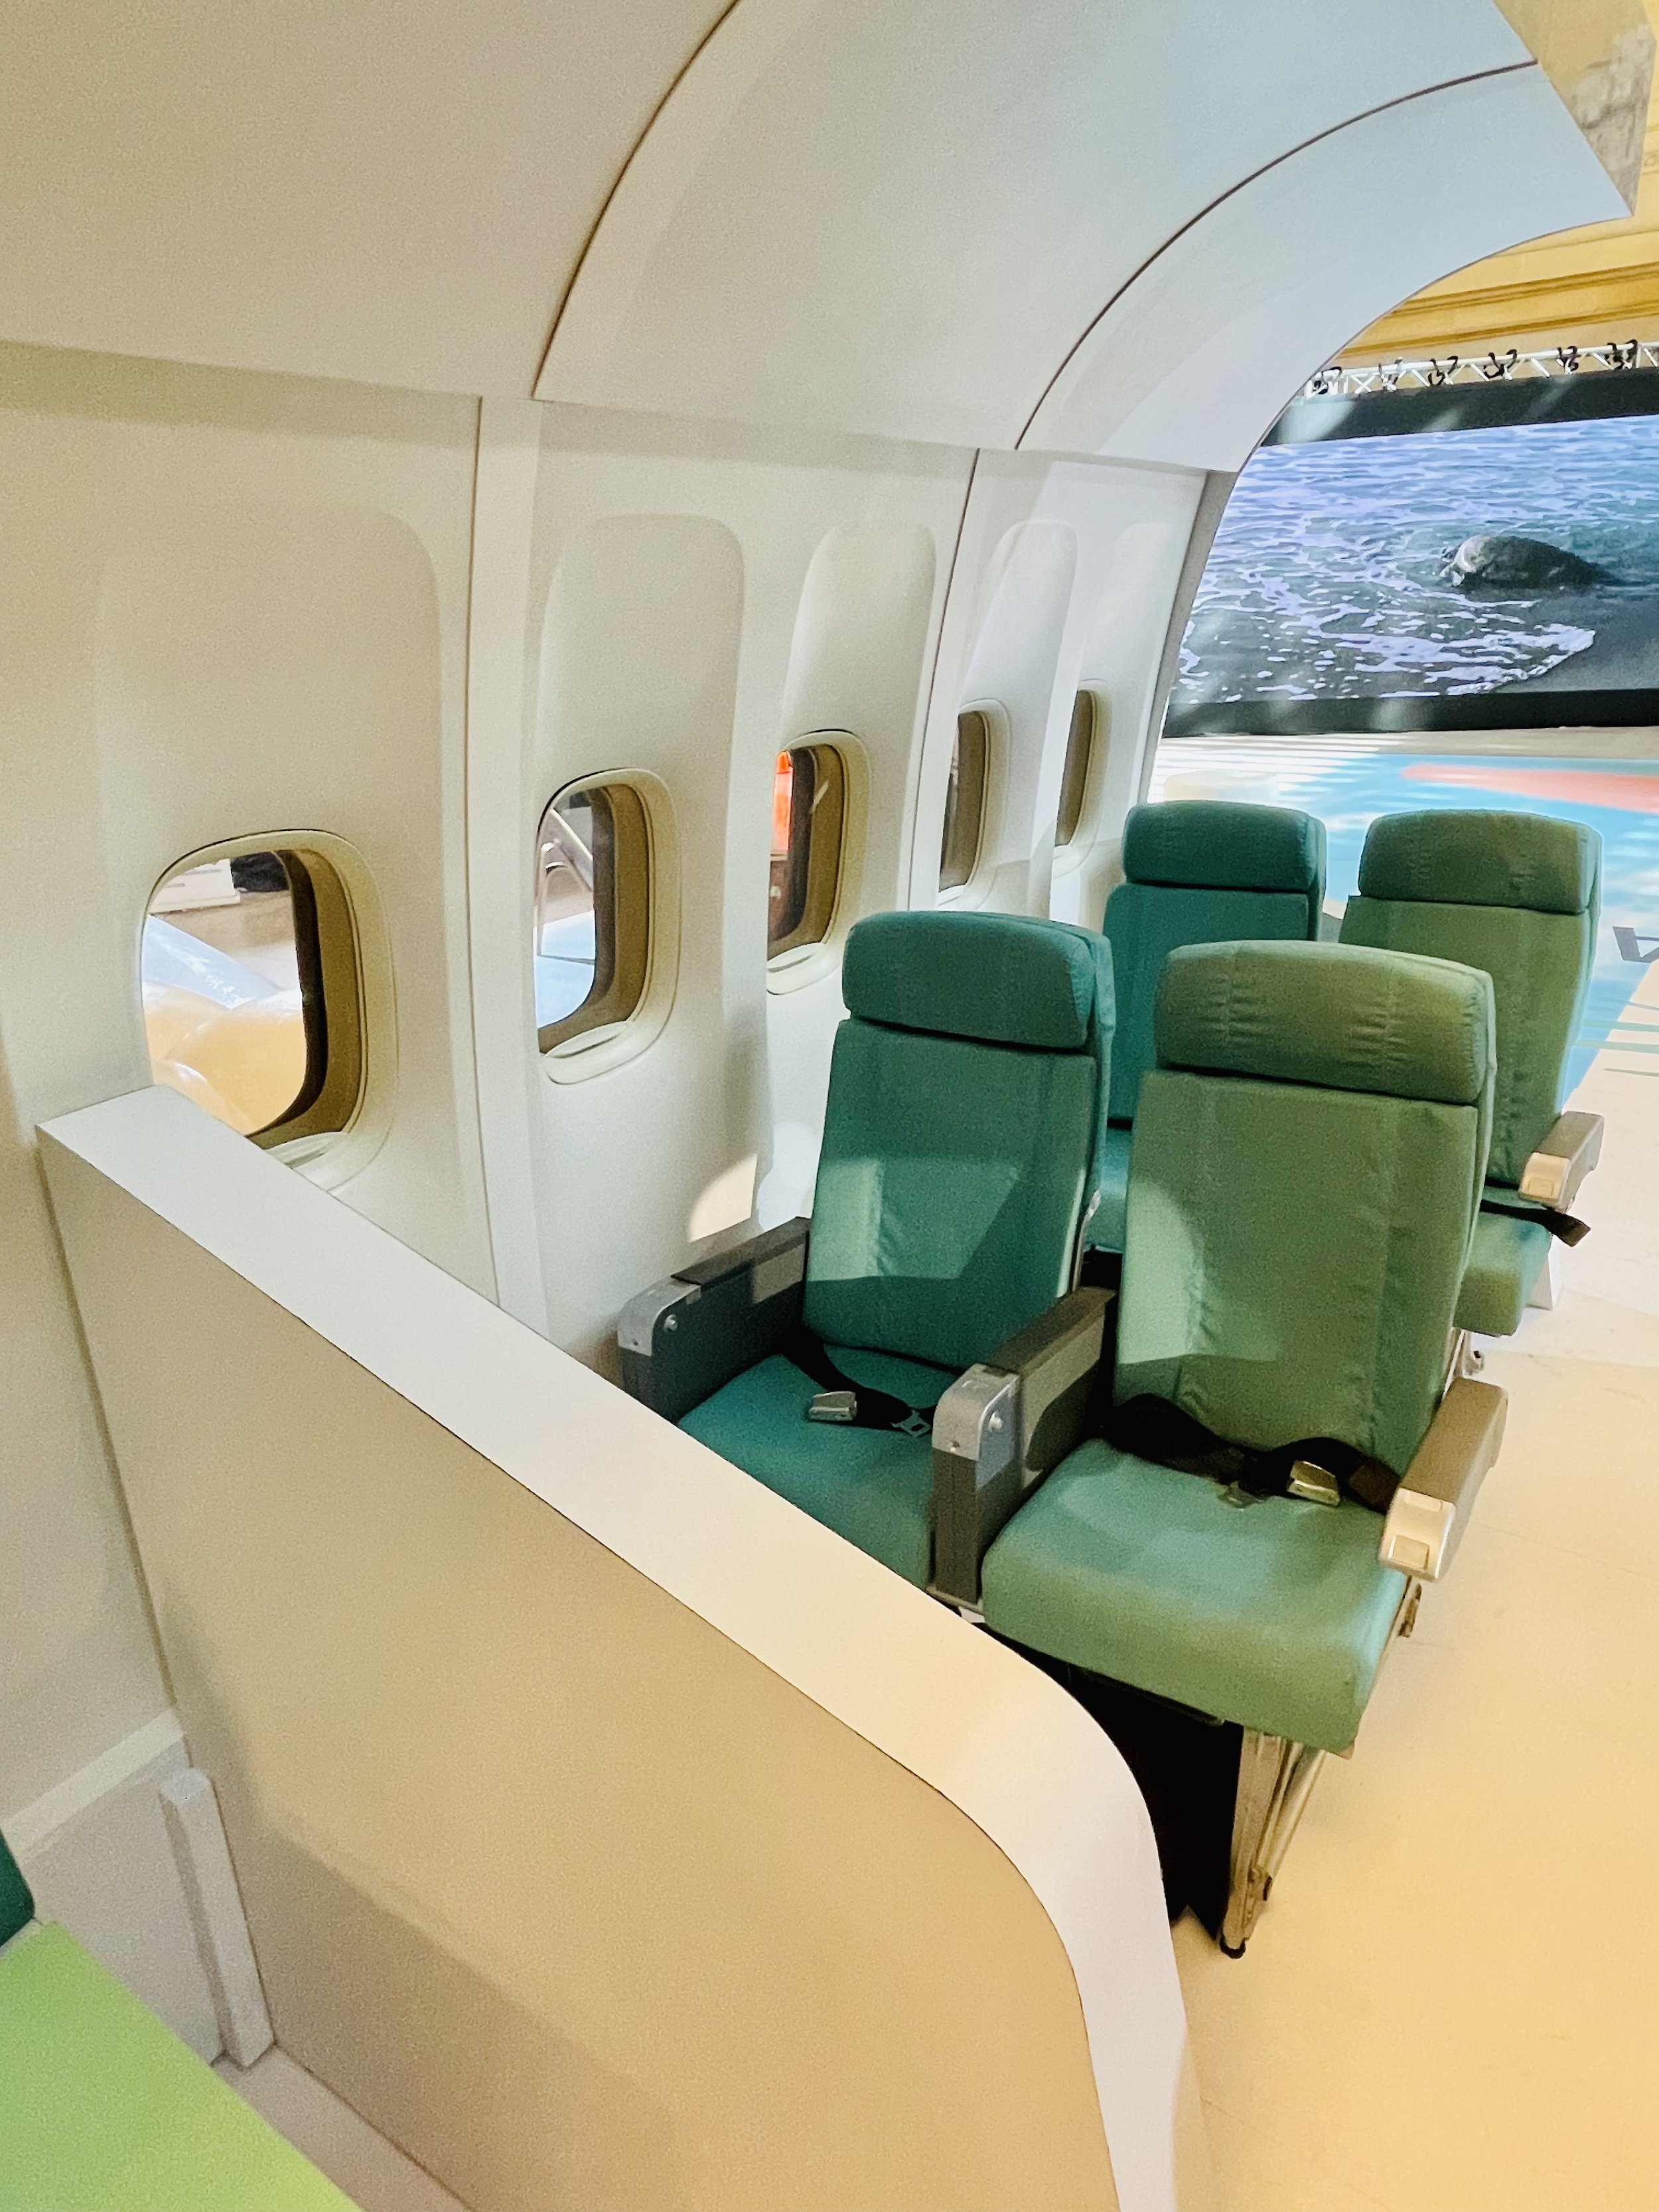 Plane Interior Seats.jpg